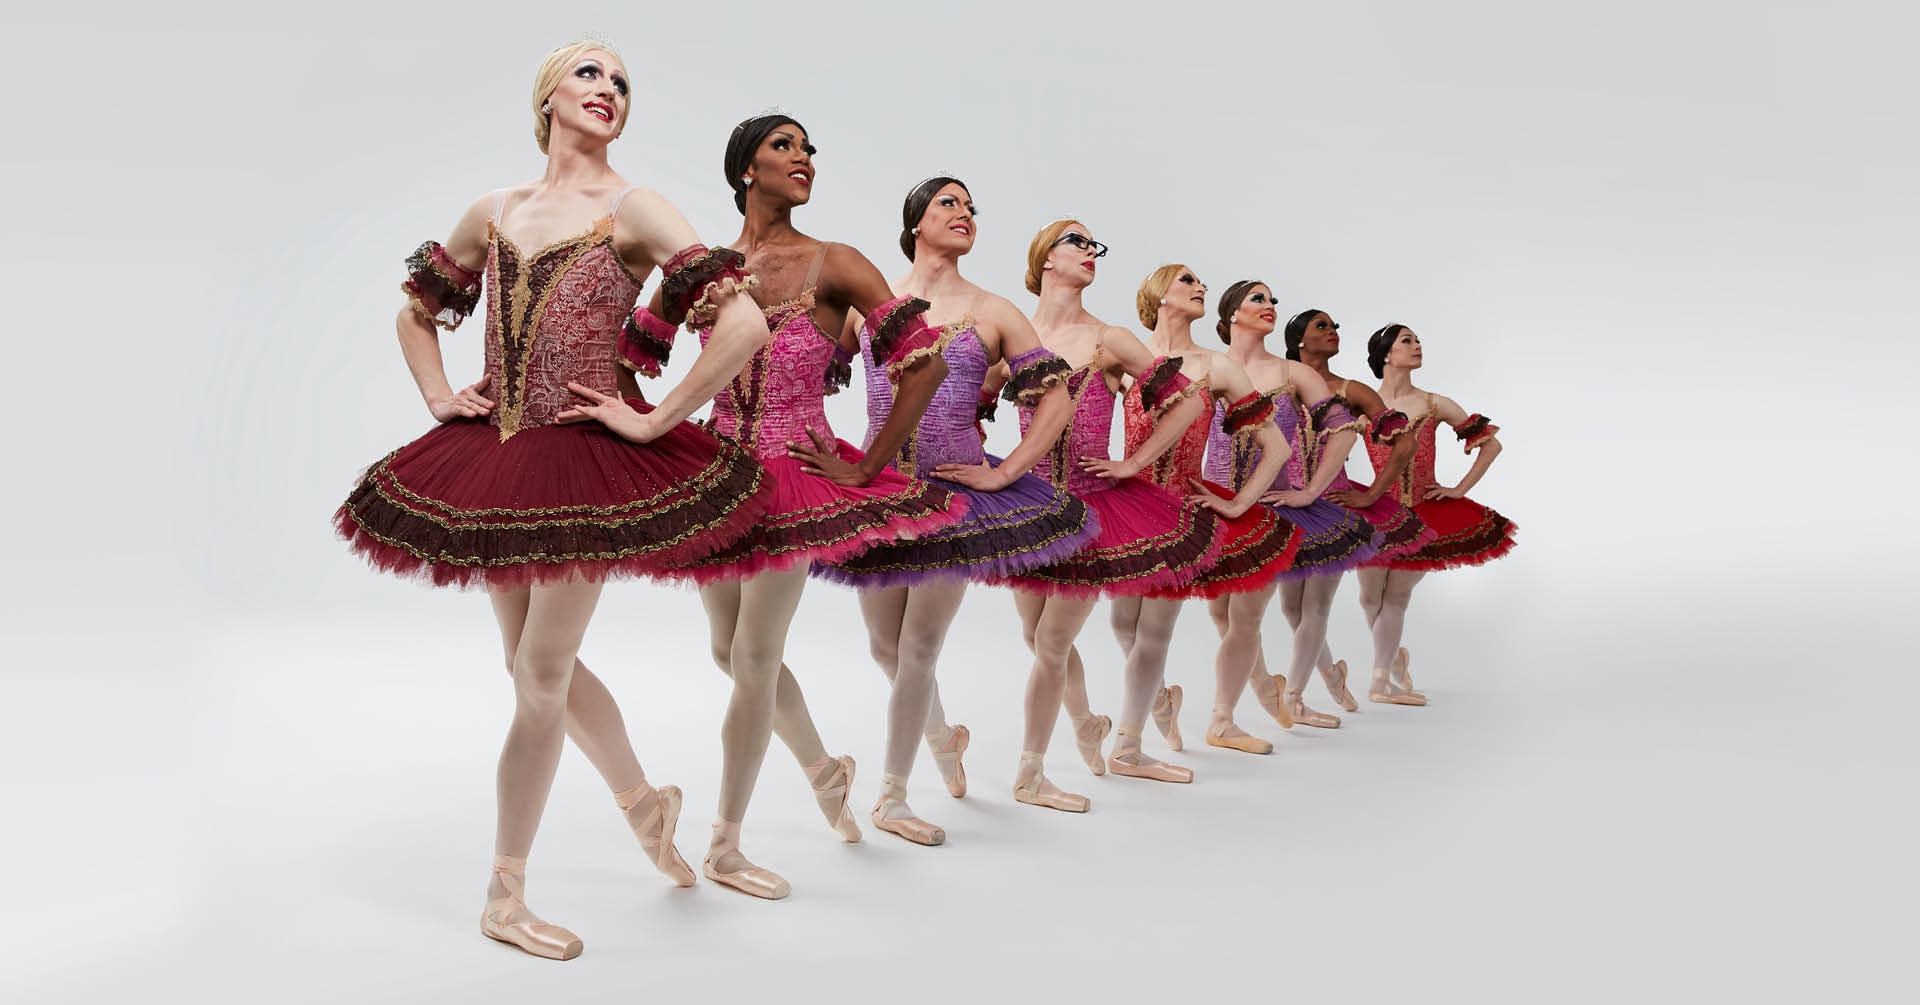 Dancers from Les Ballets Trockadero de Monte Carlo posed in red dresses